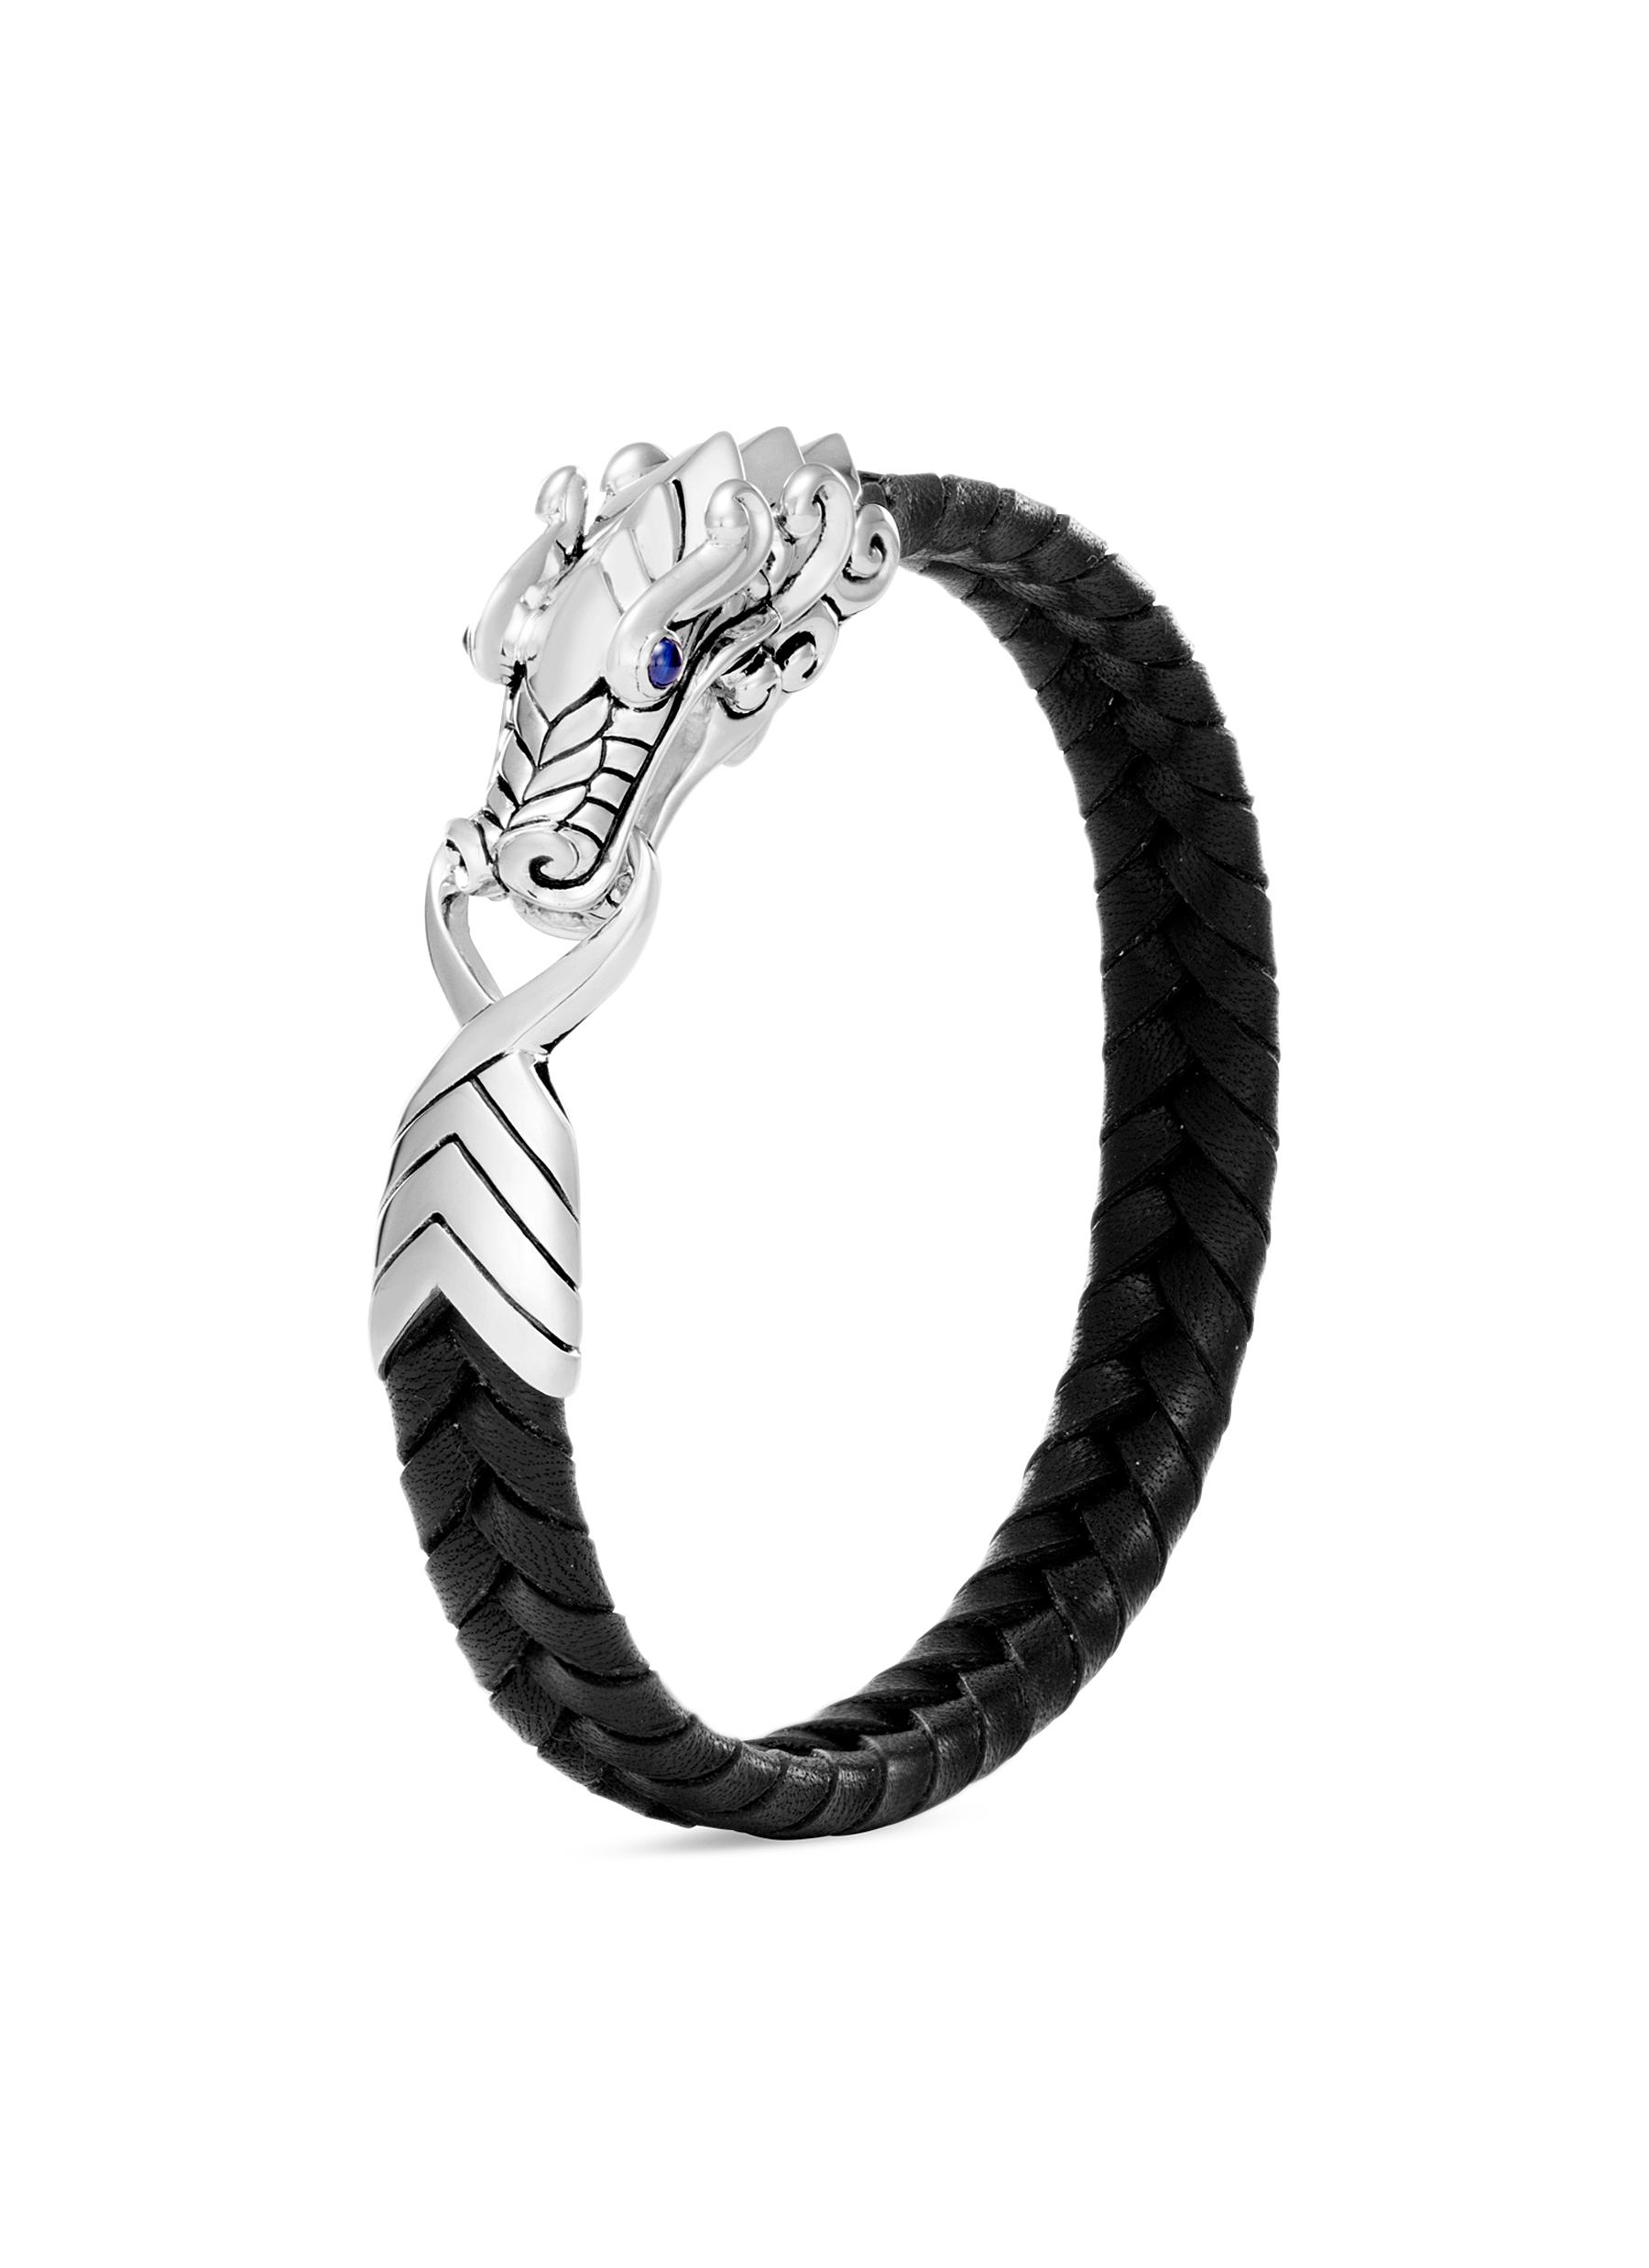 JOHN HARDY WOMENs Legends Naga Gold  Silver Dragon Bracelet with Gold  Ring BZ65032XM  Osbornes Jewelers